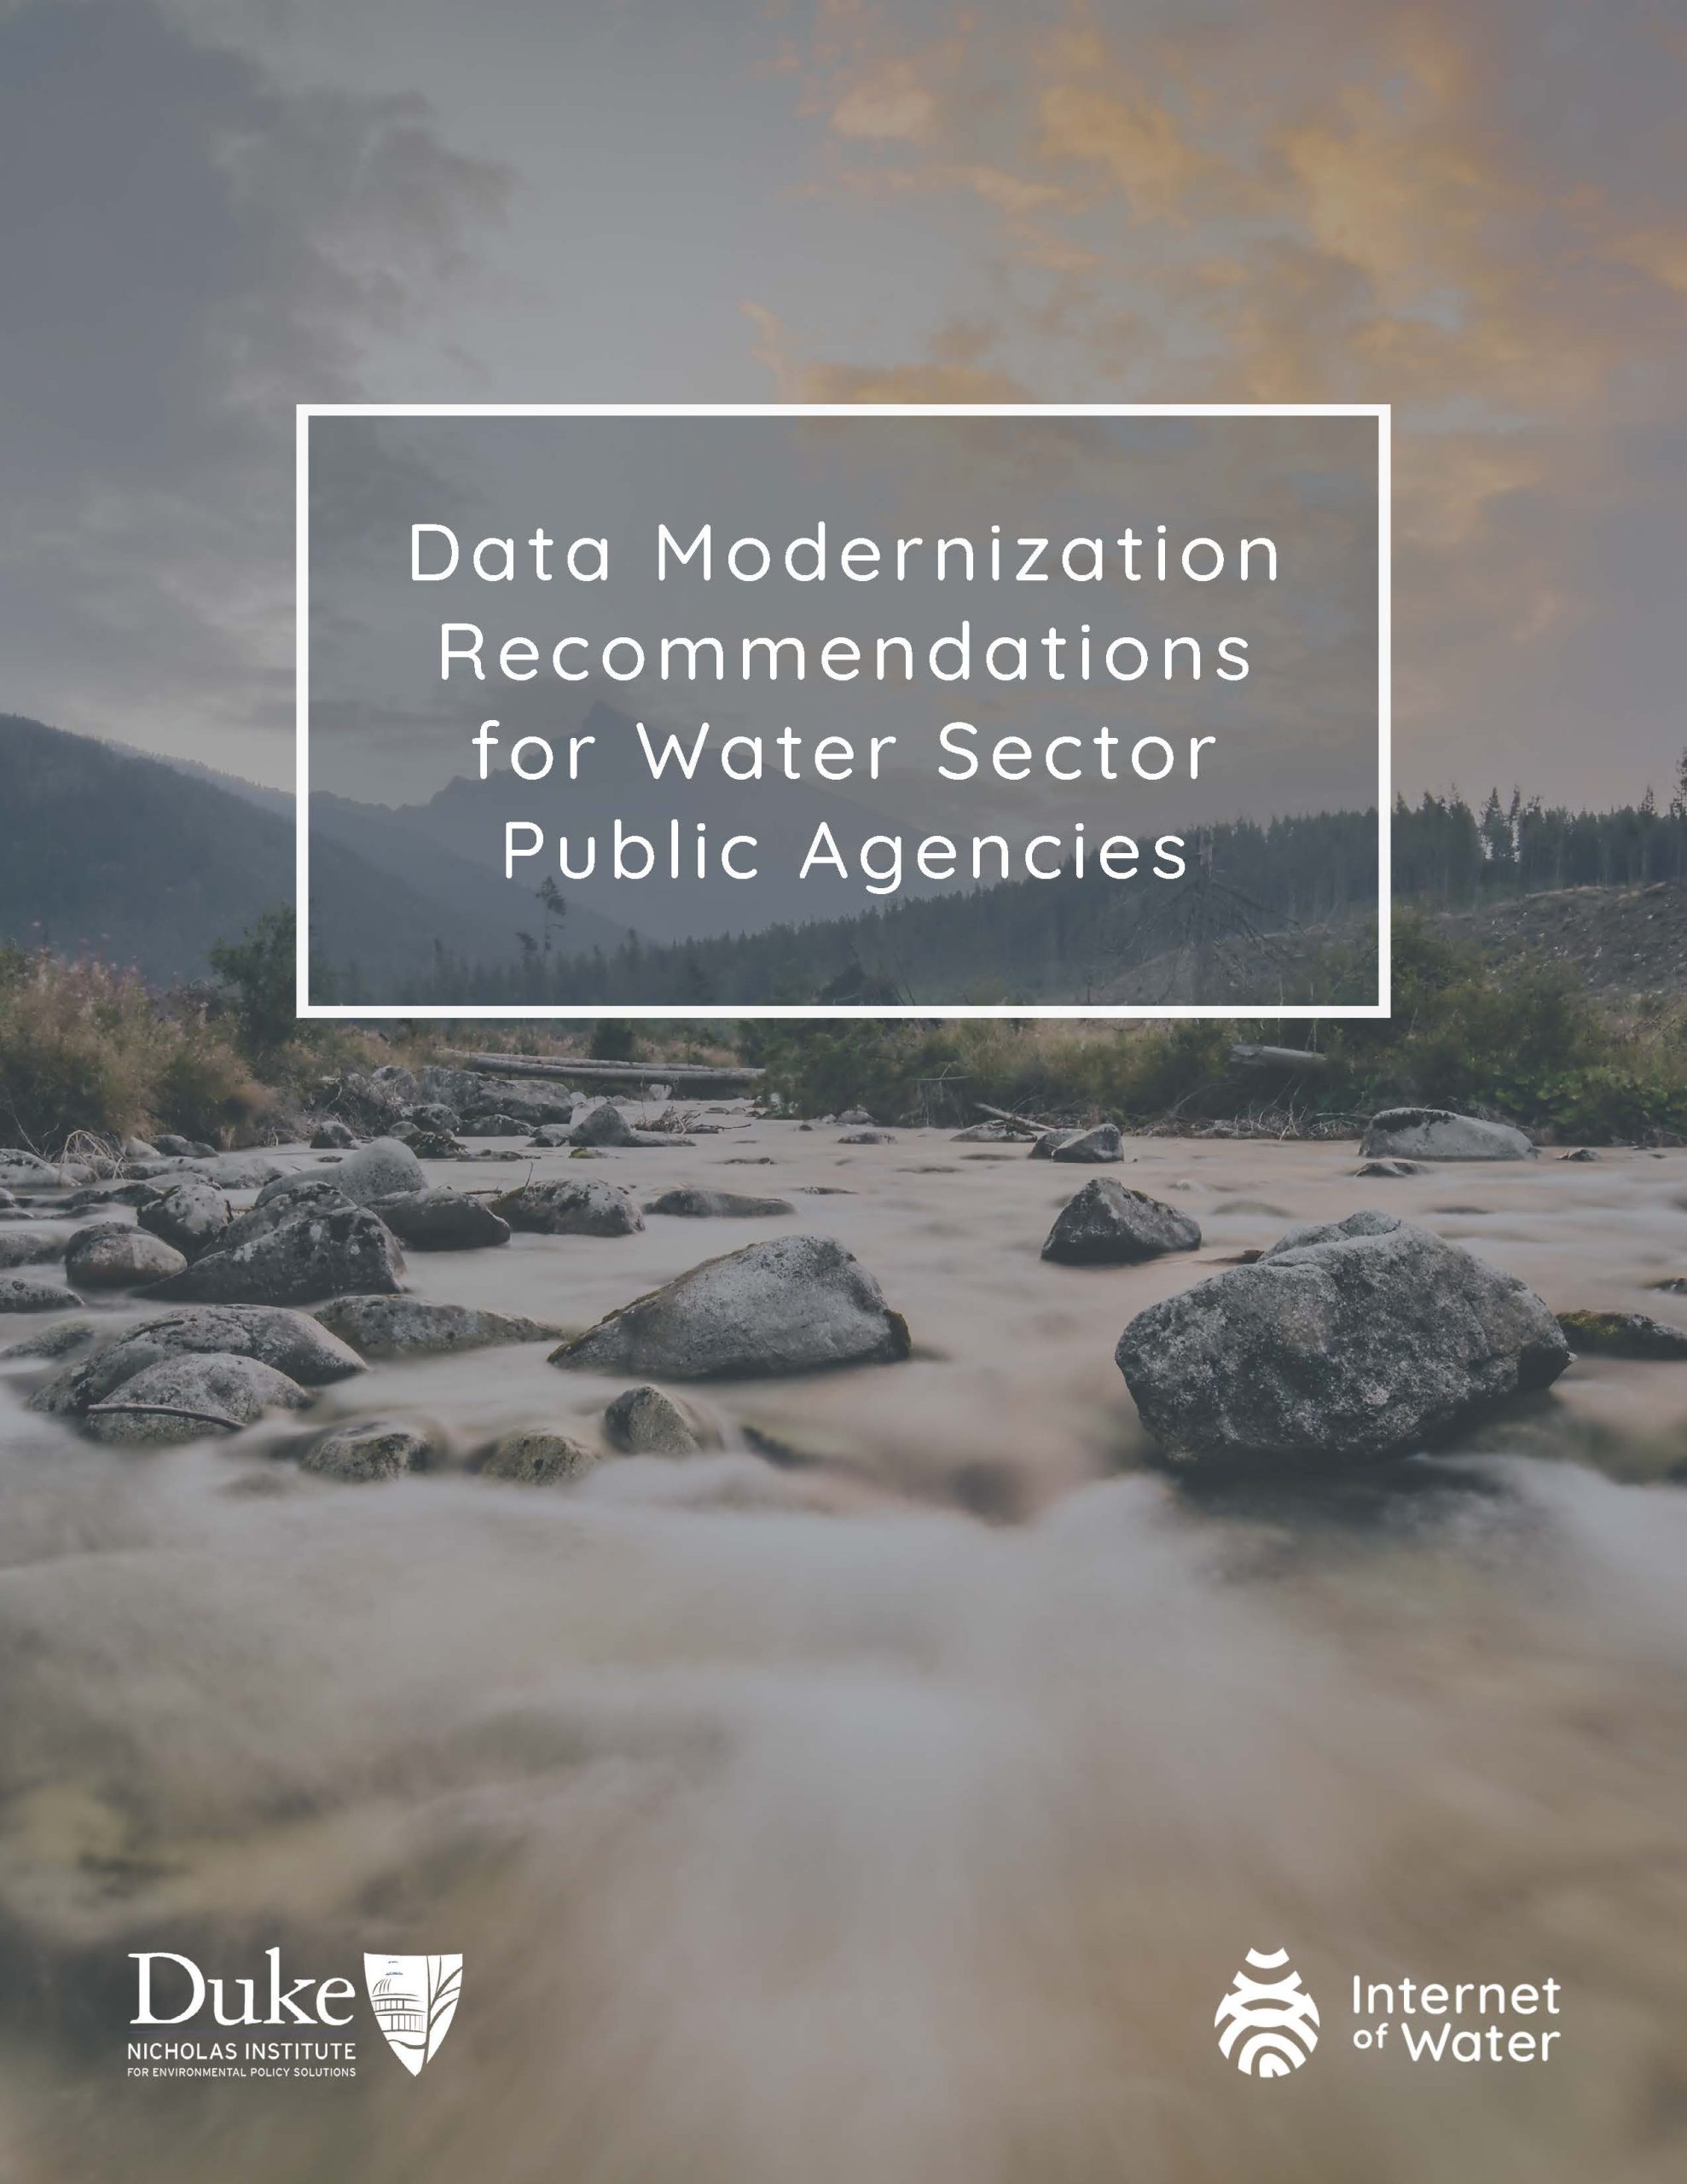 Data Modernization Recommendations for Public Agencies